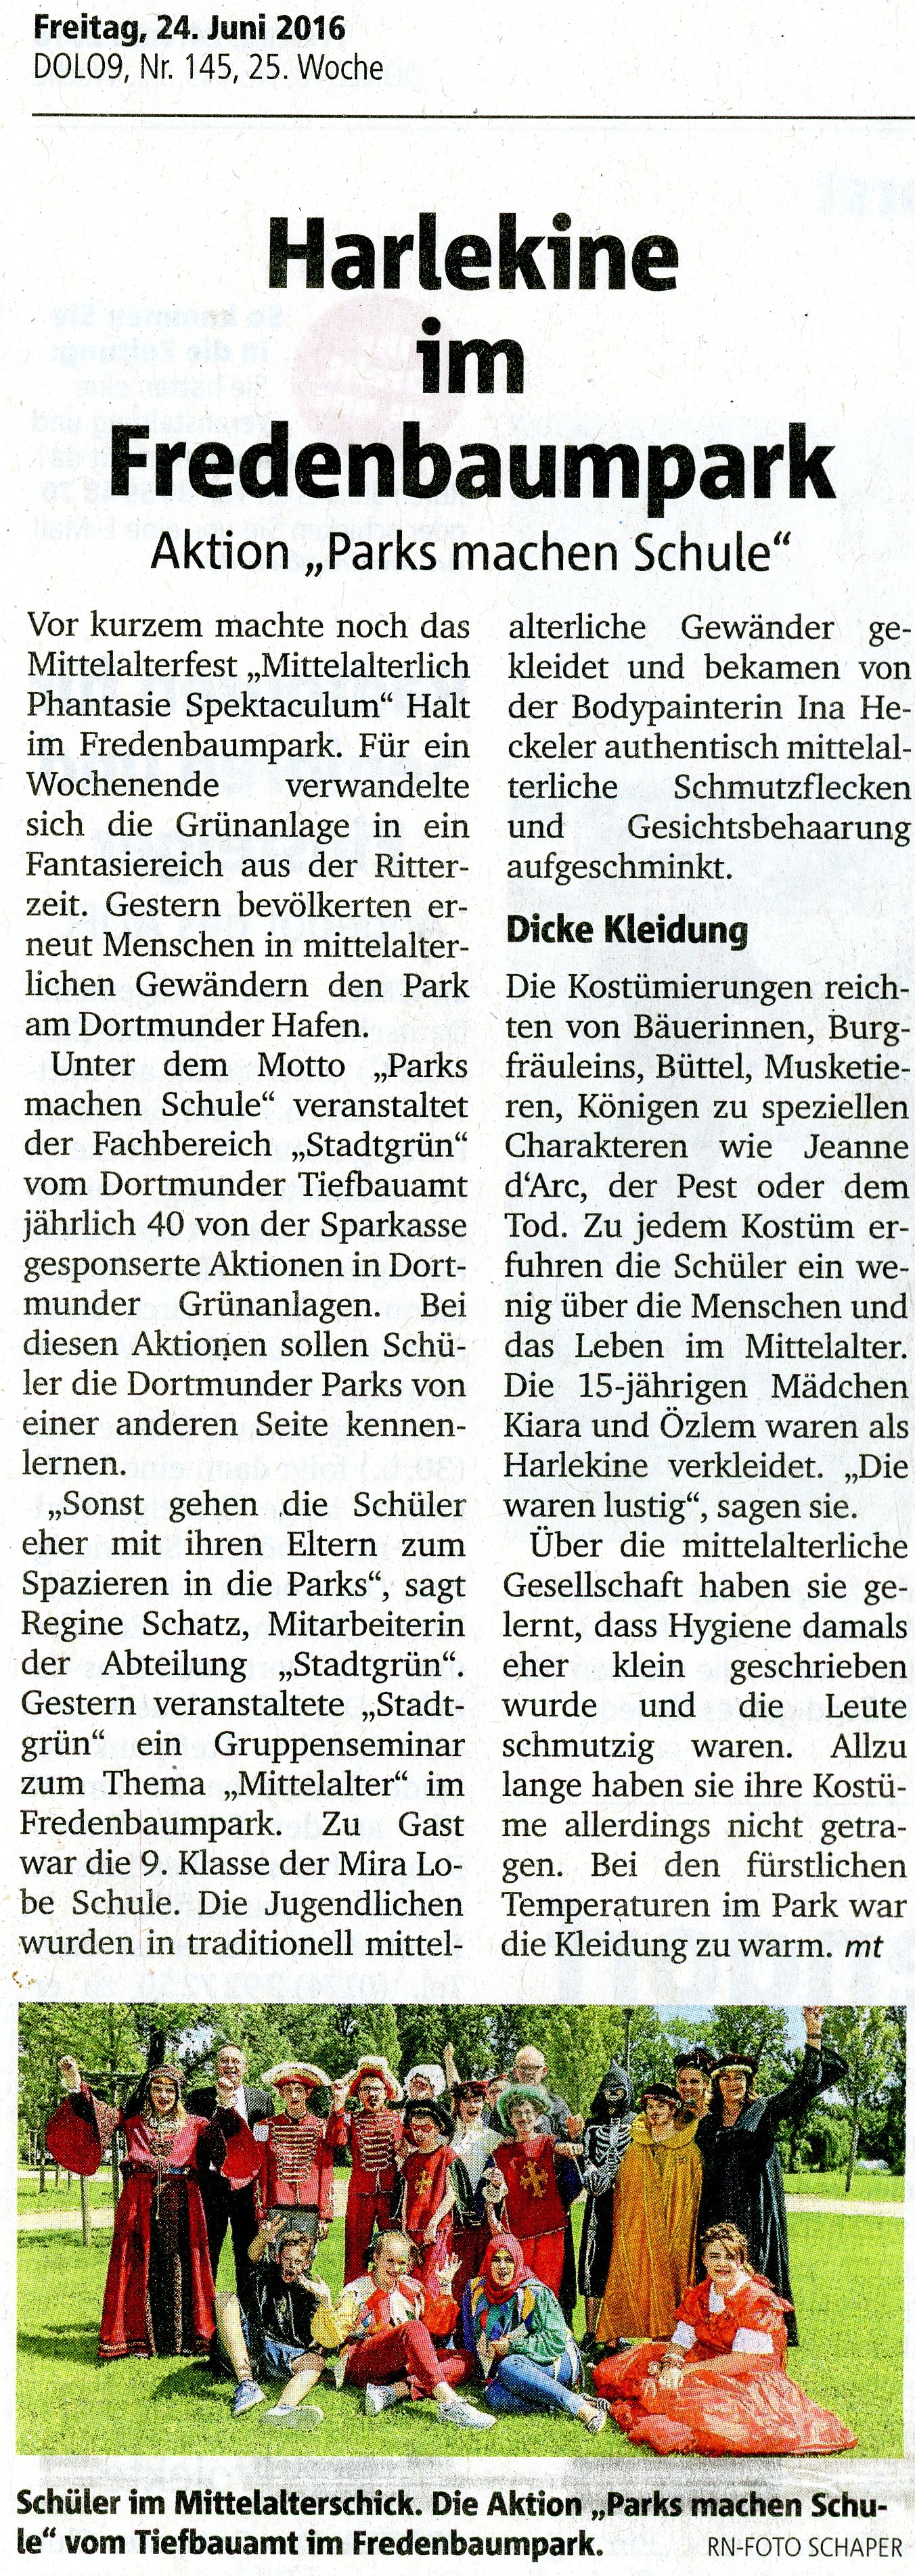 2016-06-24 Harlekine im Fredenbaumpark